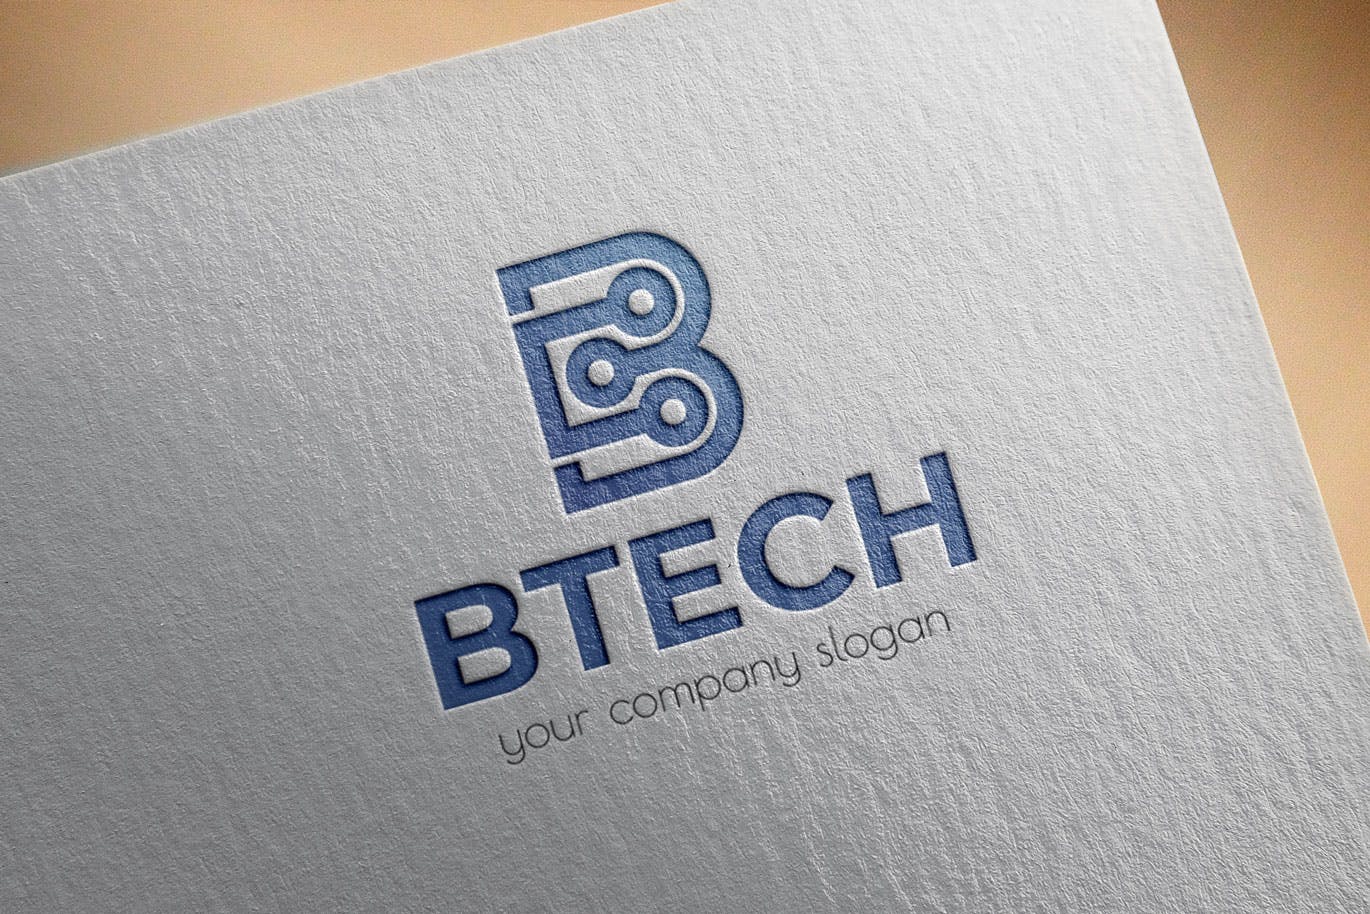 基于B字母图形的企业Logo设计16图库精选模板 Letter Based Business Logo Template插图(2)